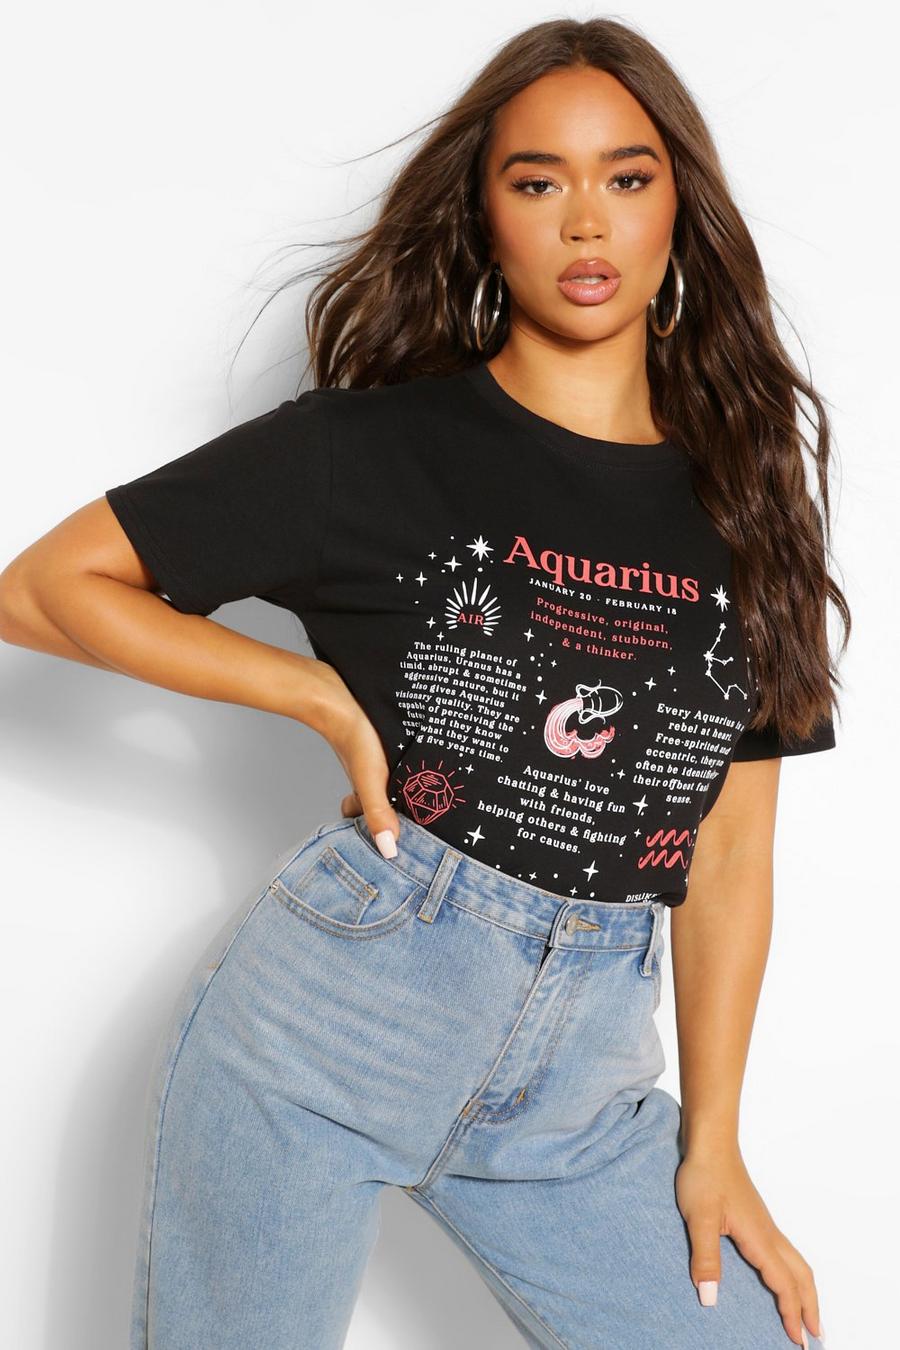 T-shirt horoscope "Aquarius moods", Black image number 1